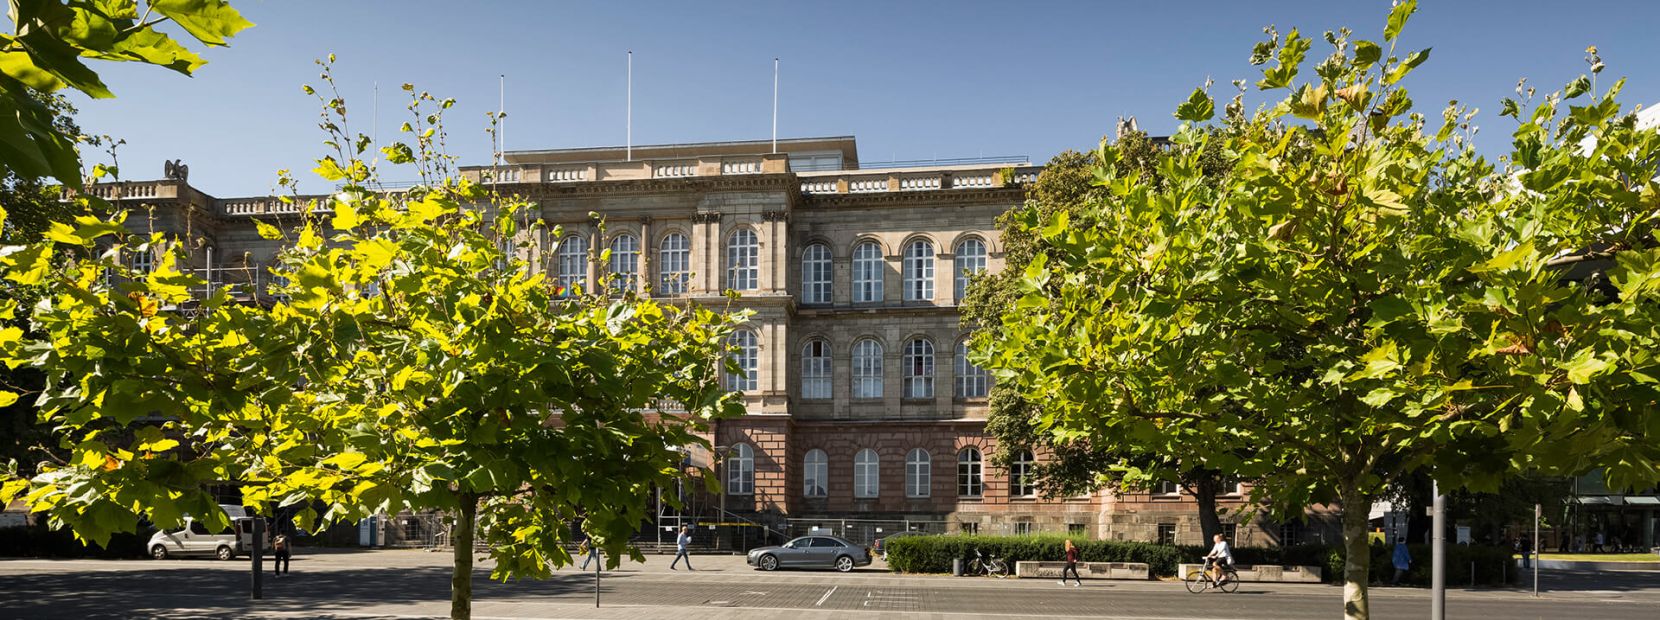 Main Building of RWTH Aachen University